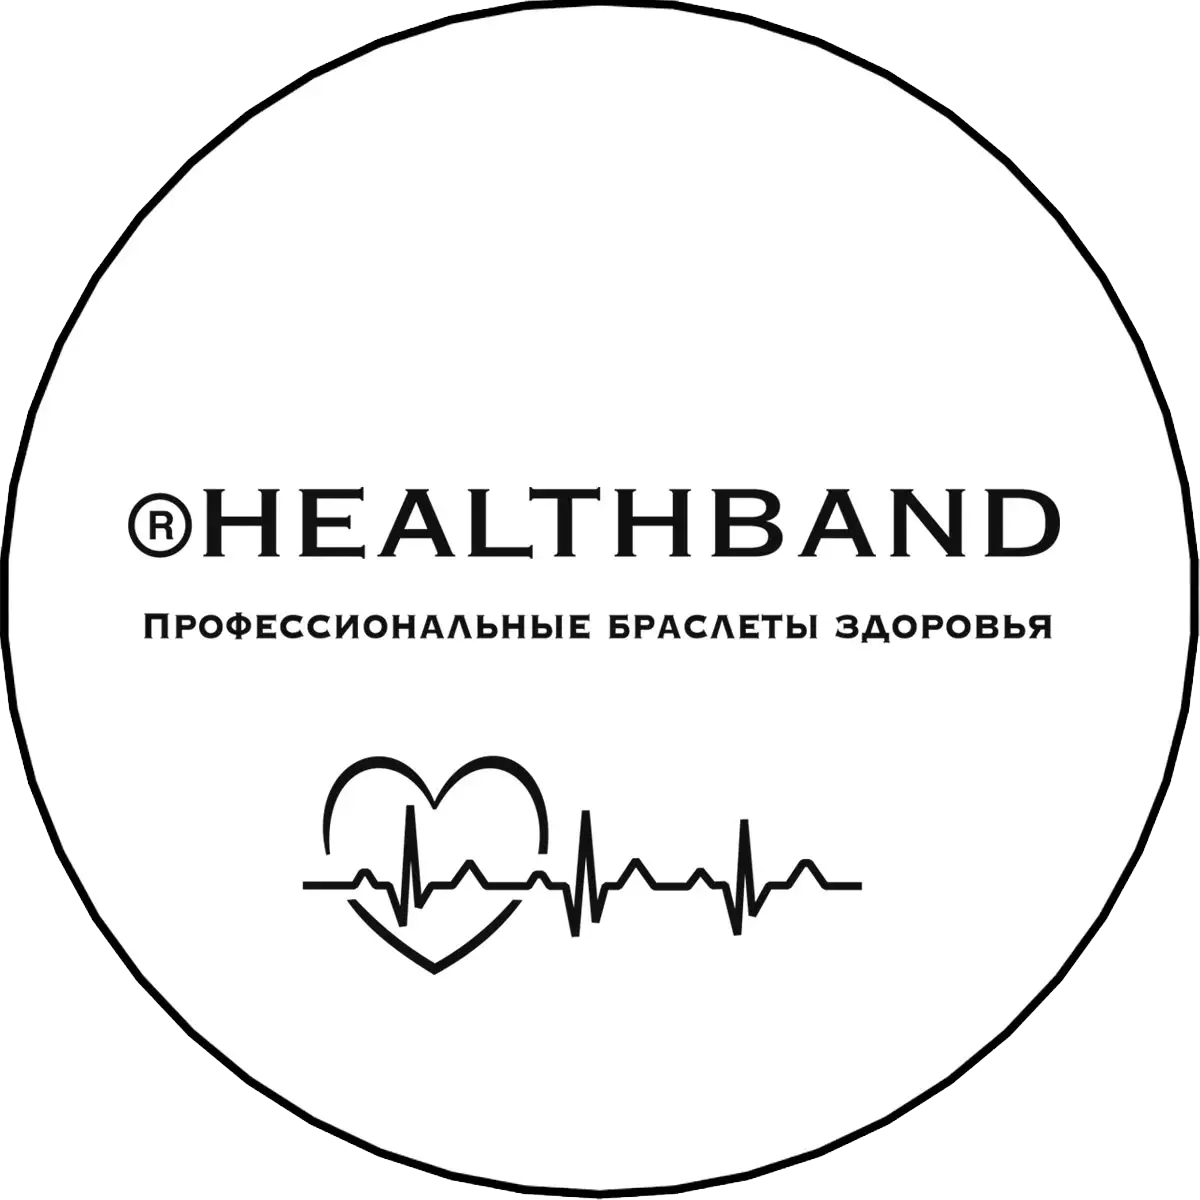 Healthband biomer bt68. Часы здоровья Health Band. HEALTHBAND Pro №10. HEALTHBAND Health watch Pro 5. "HEALTHBAND  Health Band №4, 40mm".